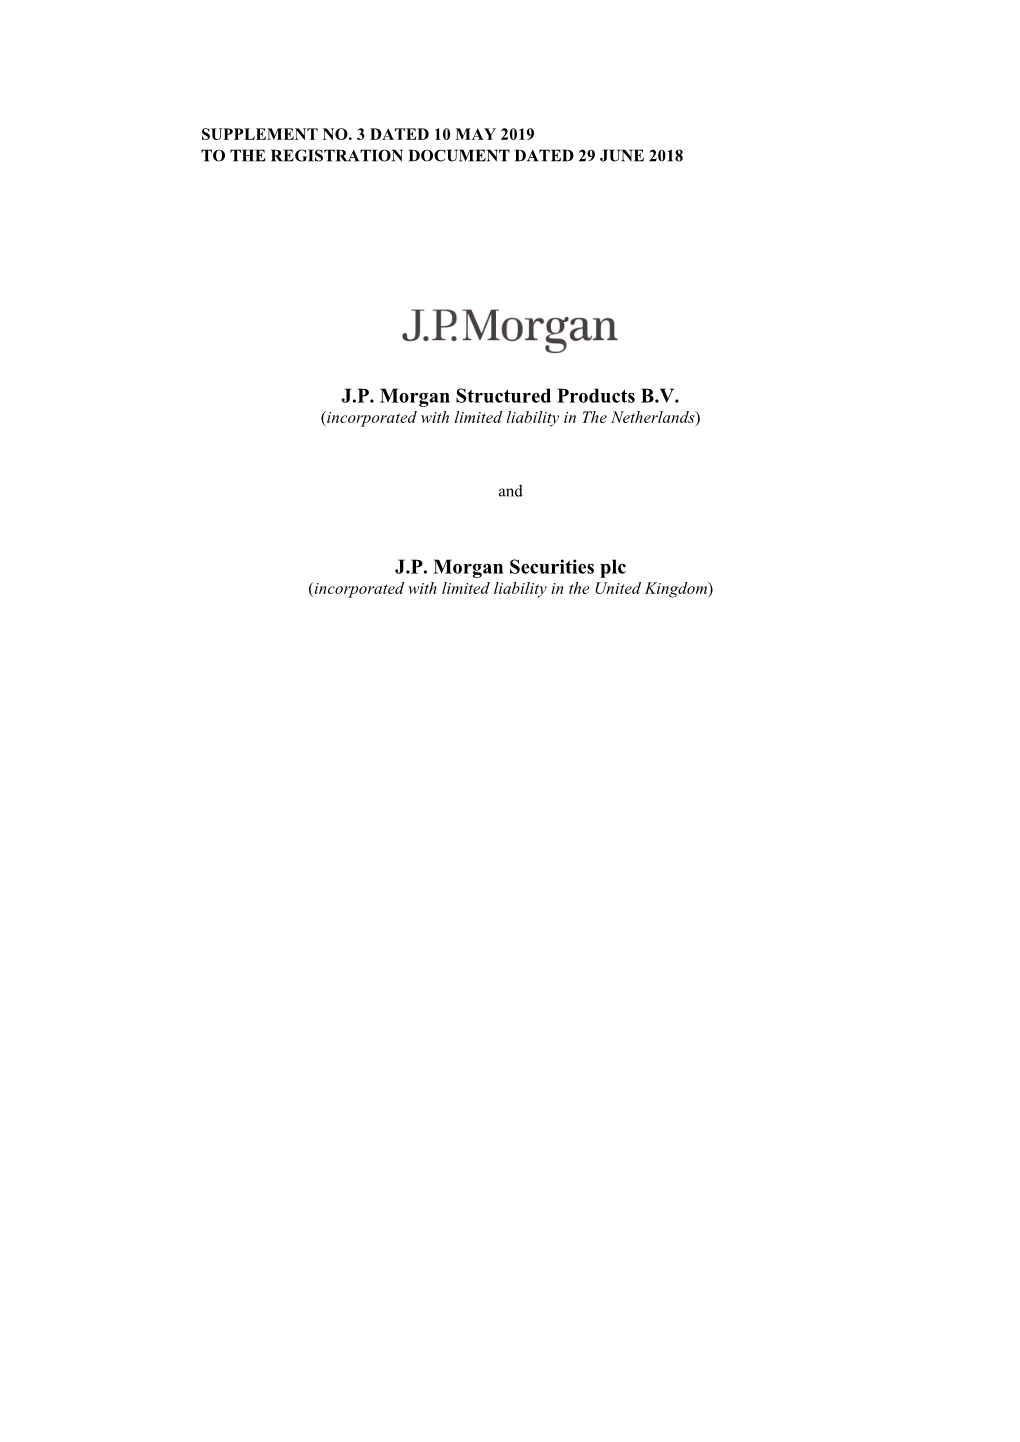 J.P. Morgan Structured Products B.V. J.P. Morgan Securities